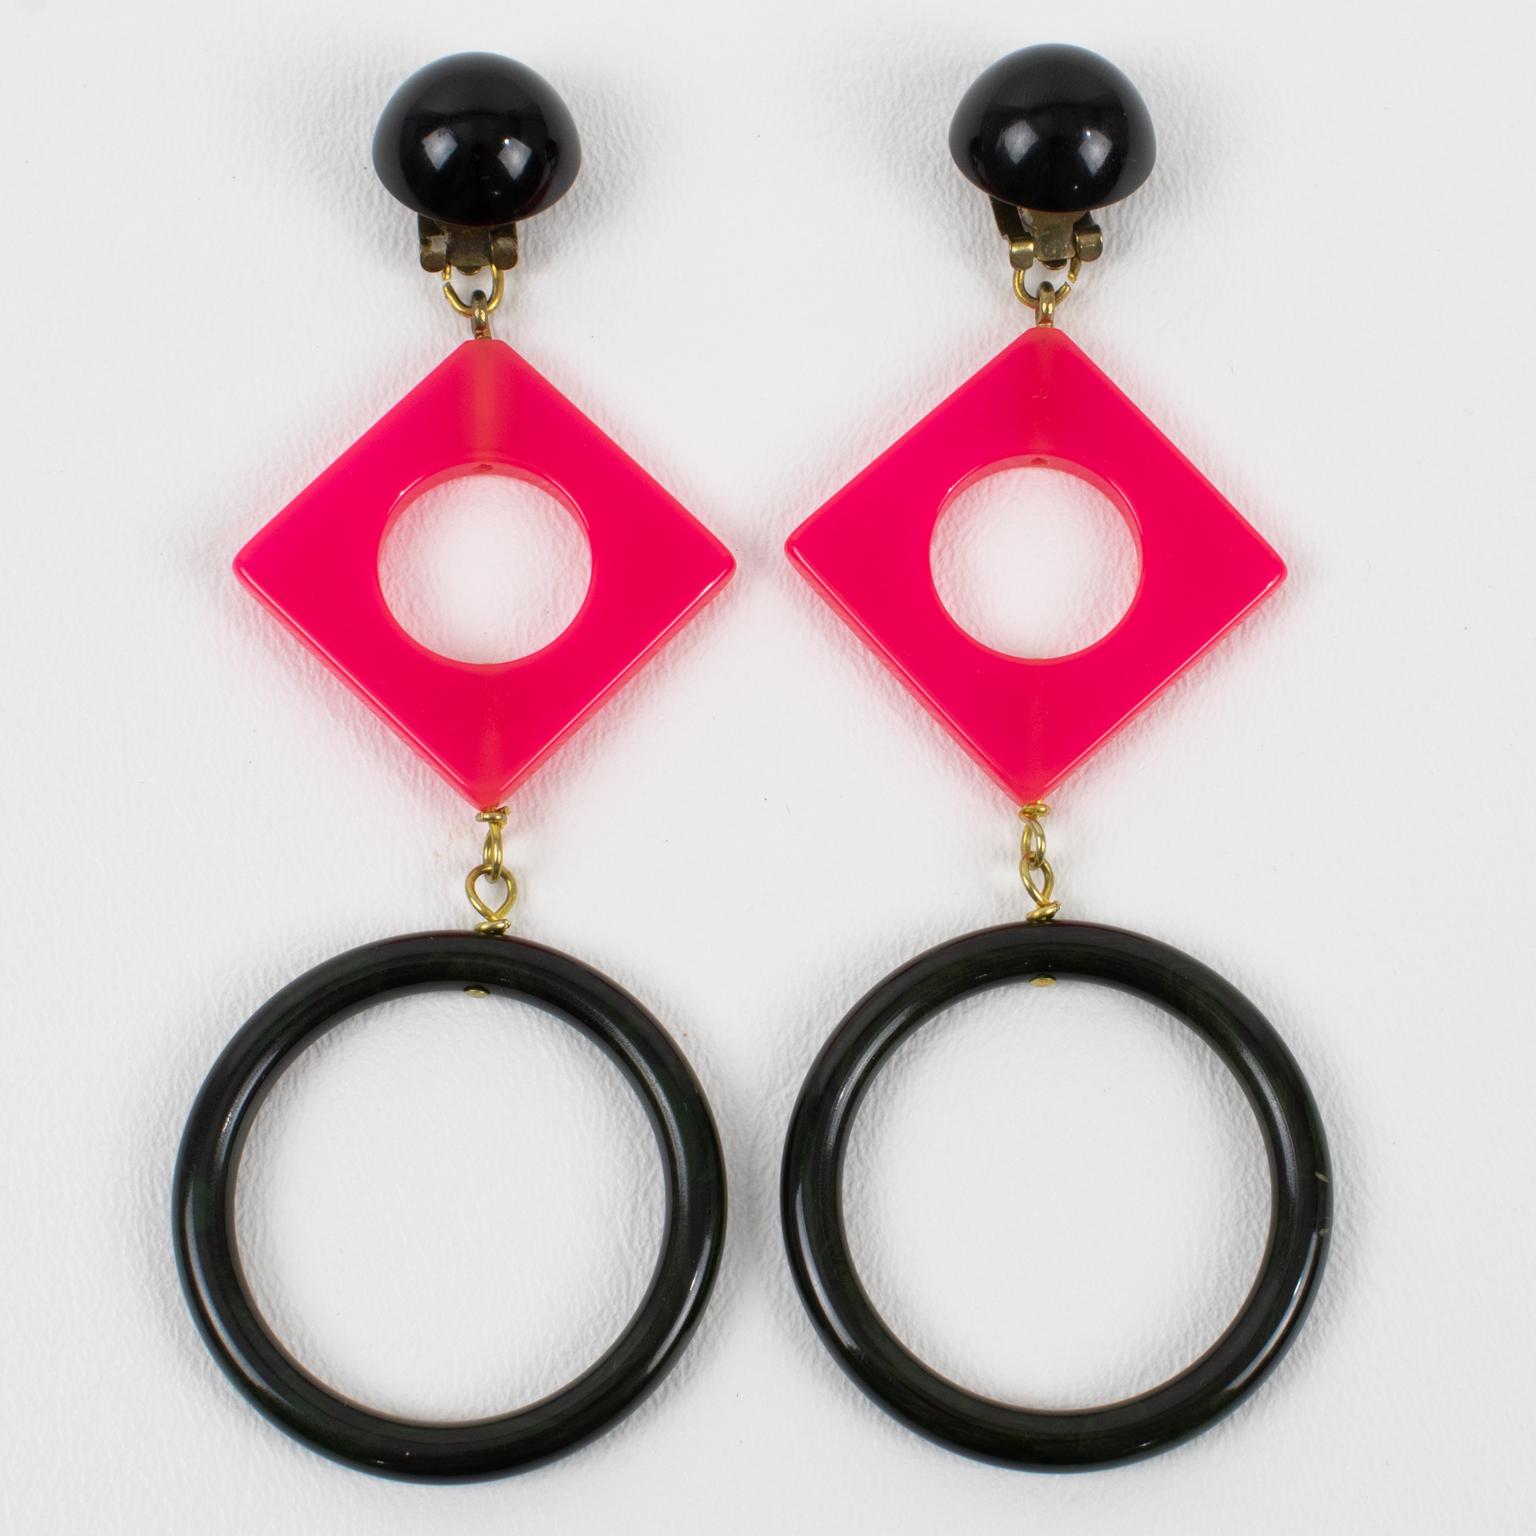 Modernist Bakelite Dangle Clip Earrings Black and Hot Pink Colors Pop Art Style For Sale